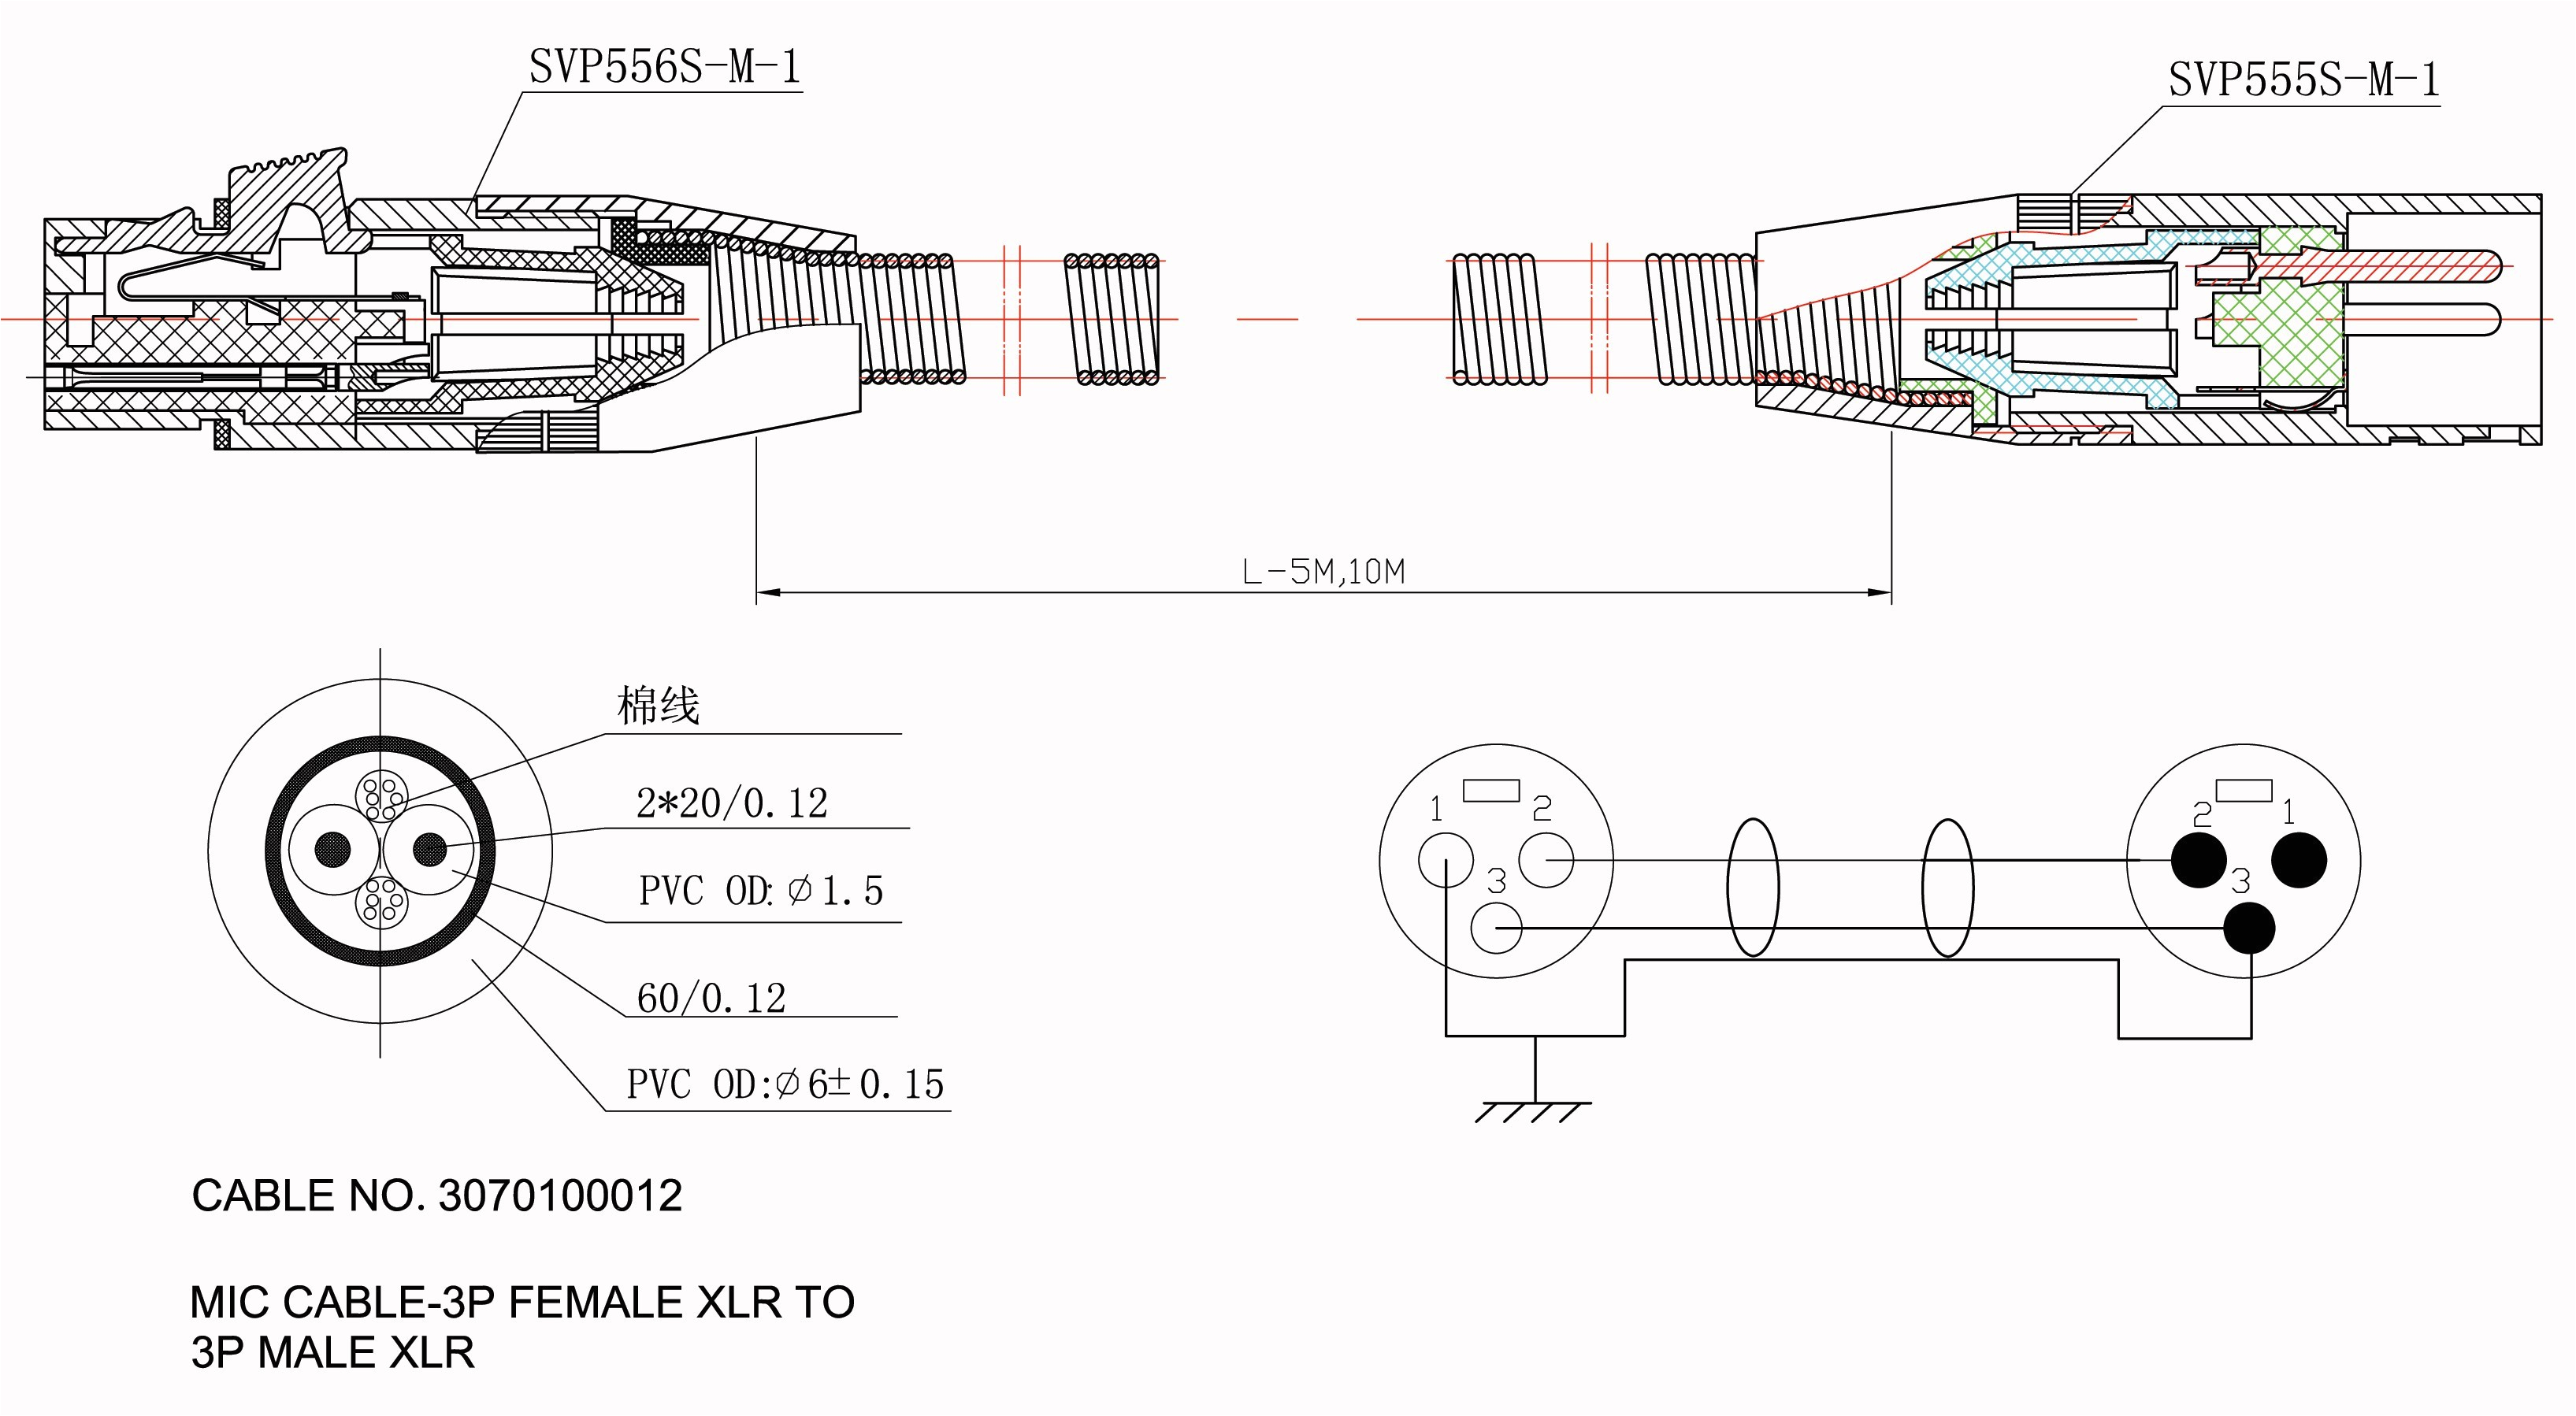 2 4 engine diagram for pvc wiring diagram load 2 4 engine diagram for pvc